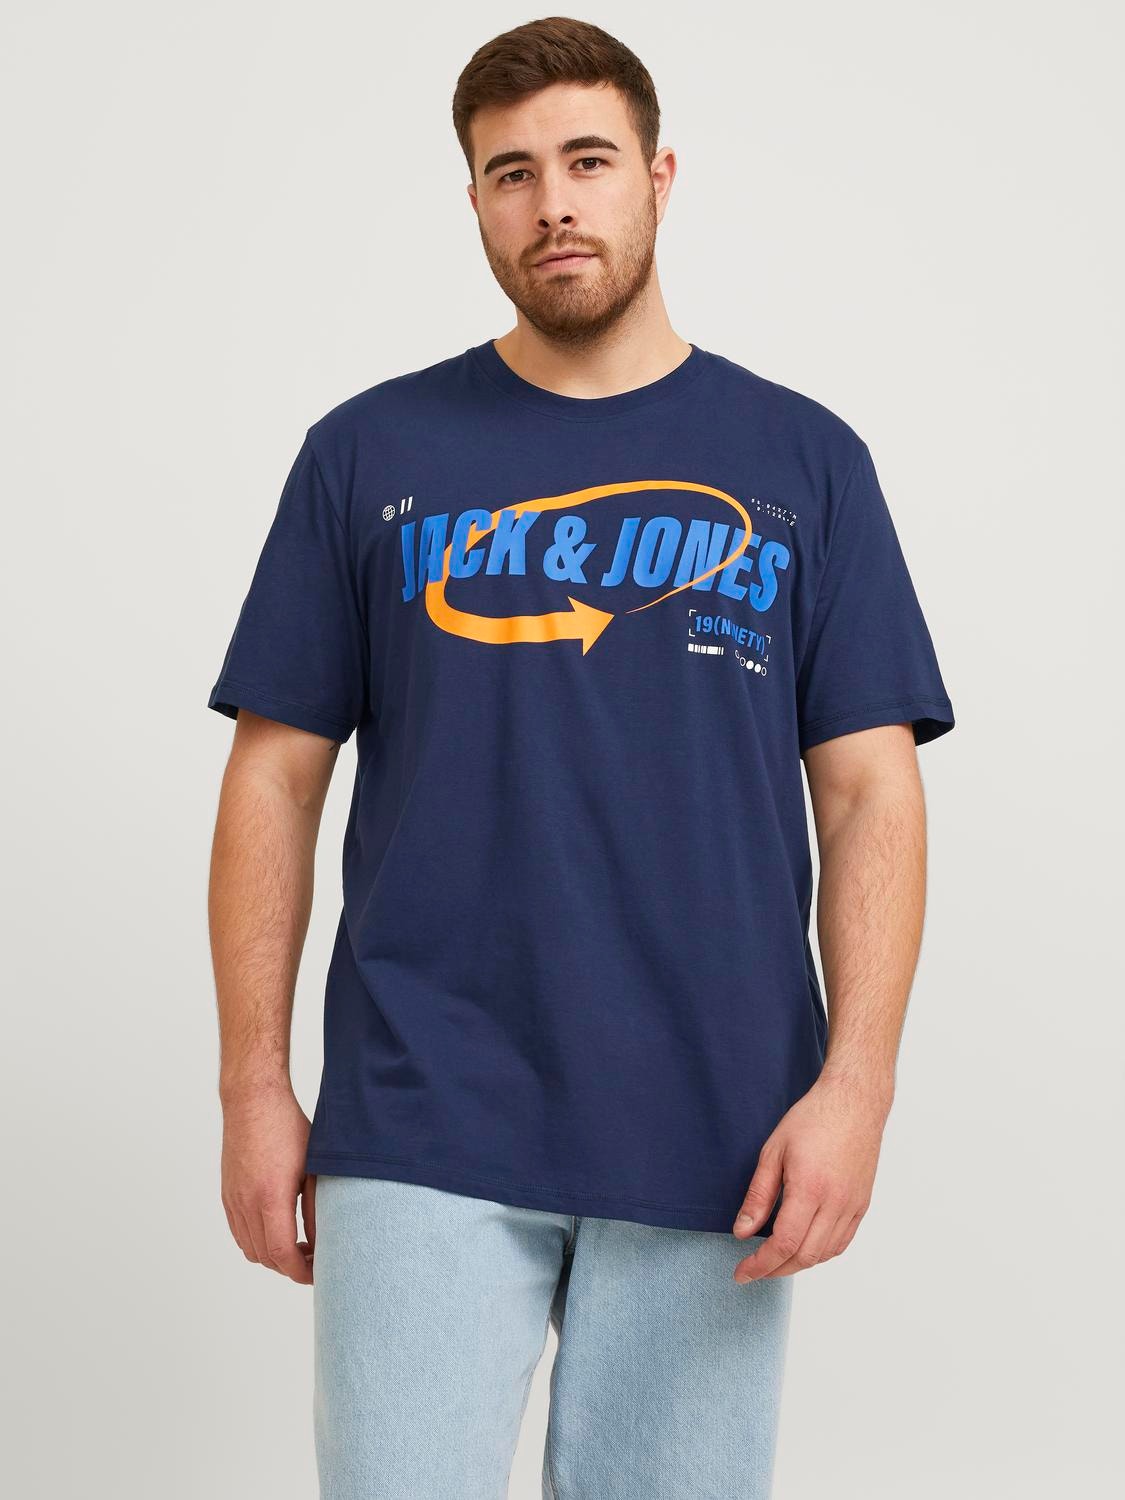 Jack & Jones Καλοκαιρινό μπλουζάκι -Navy Blazer - 12251964